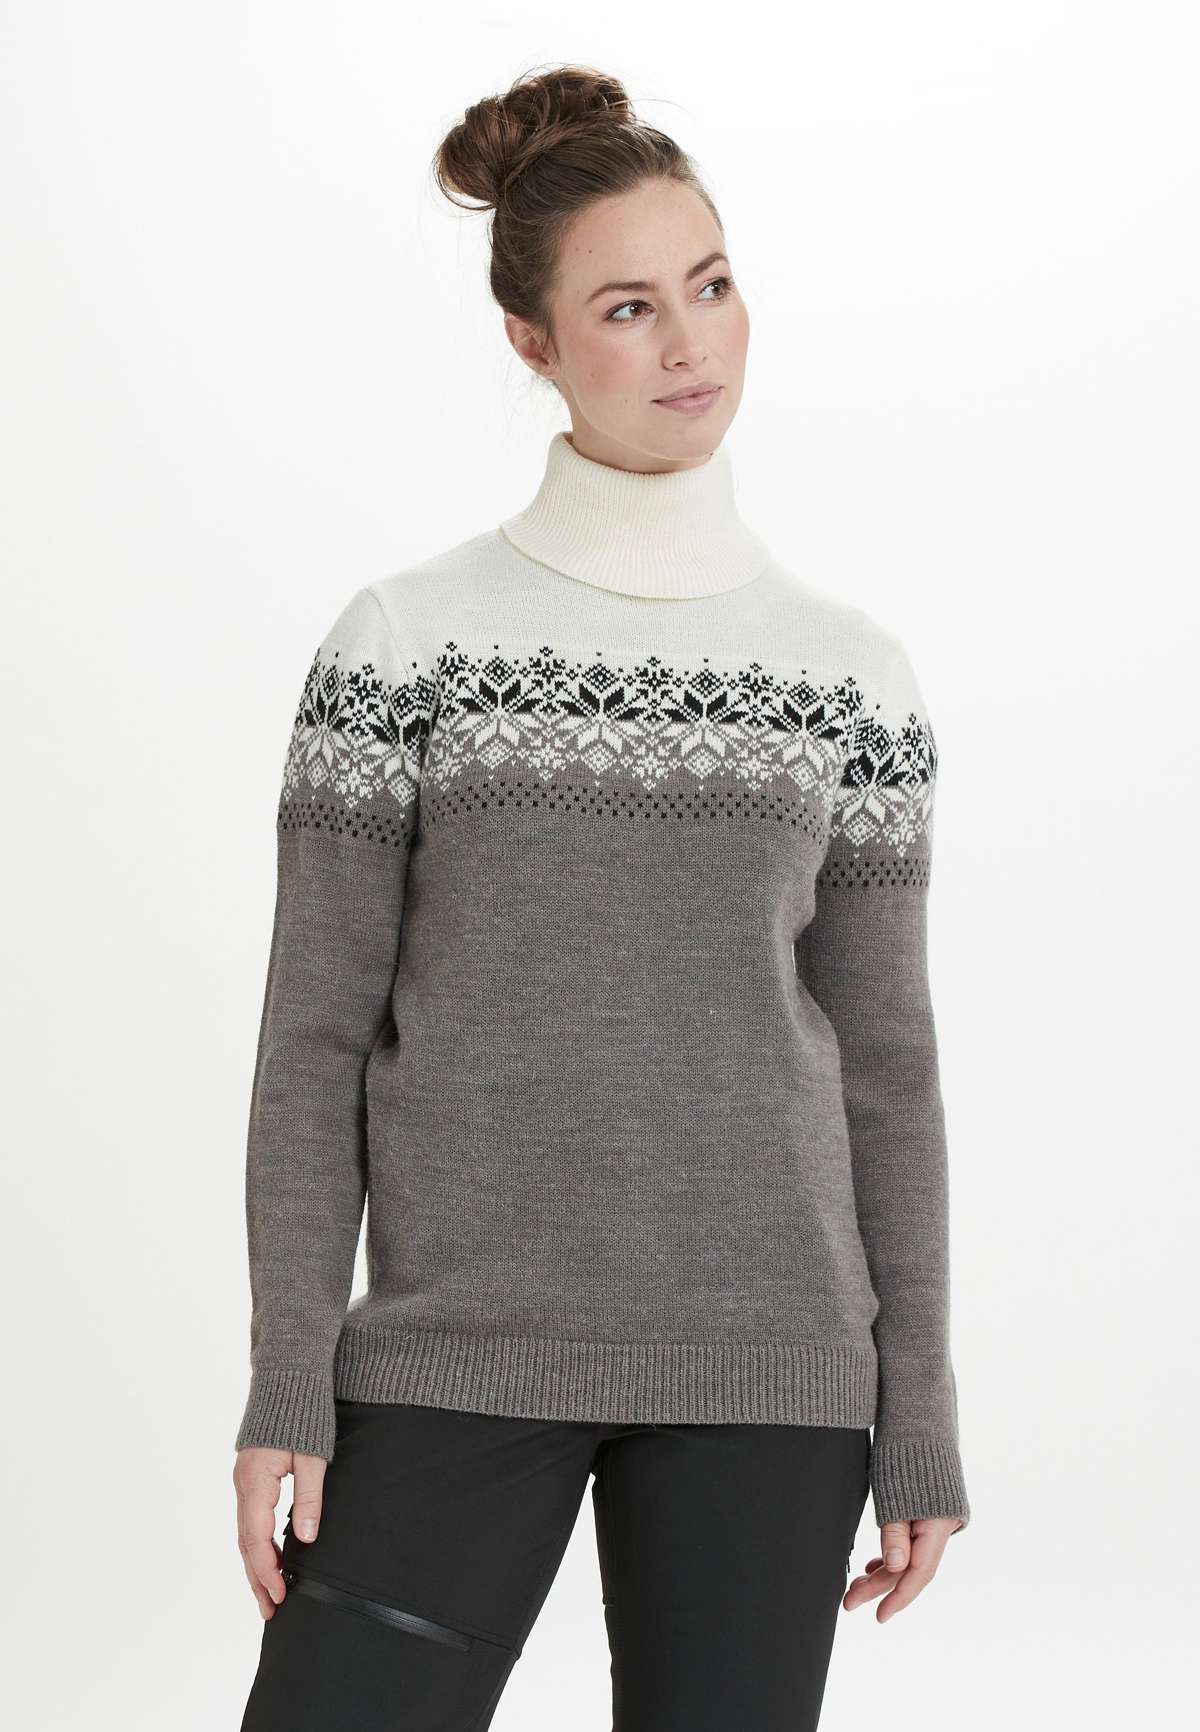 Вязаный свитер Сюзанна с зимним норвежским мотивом.